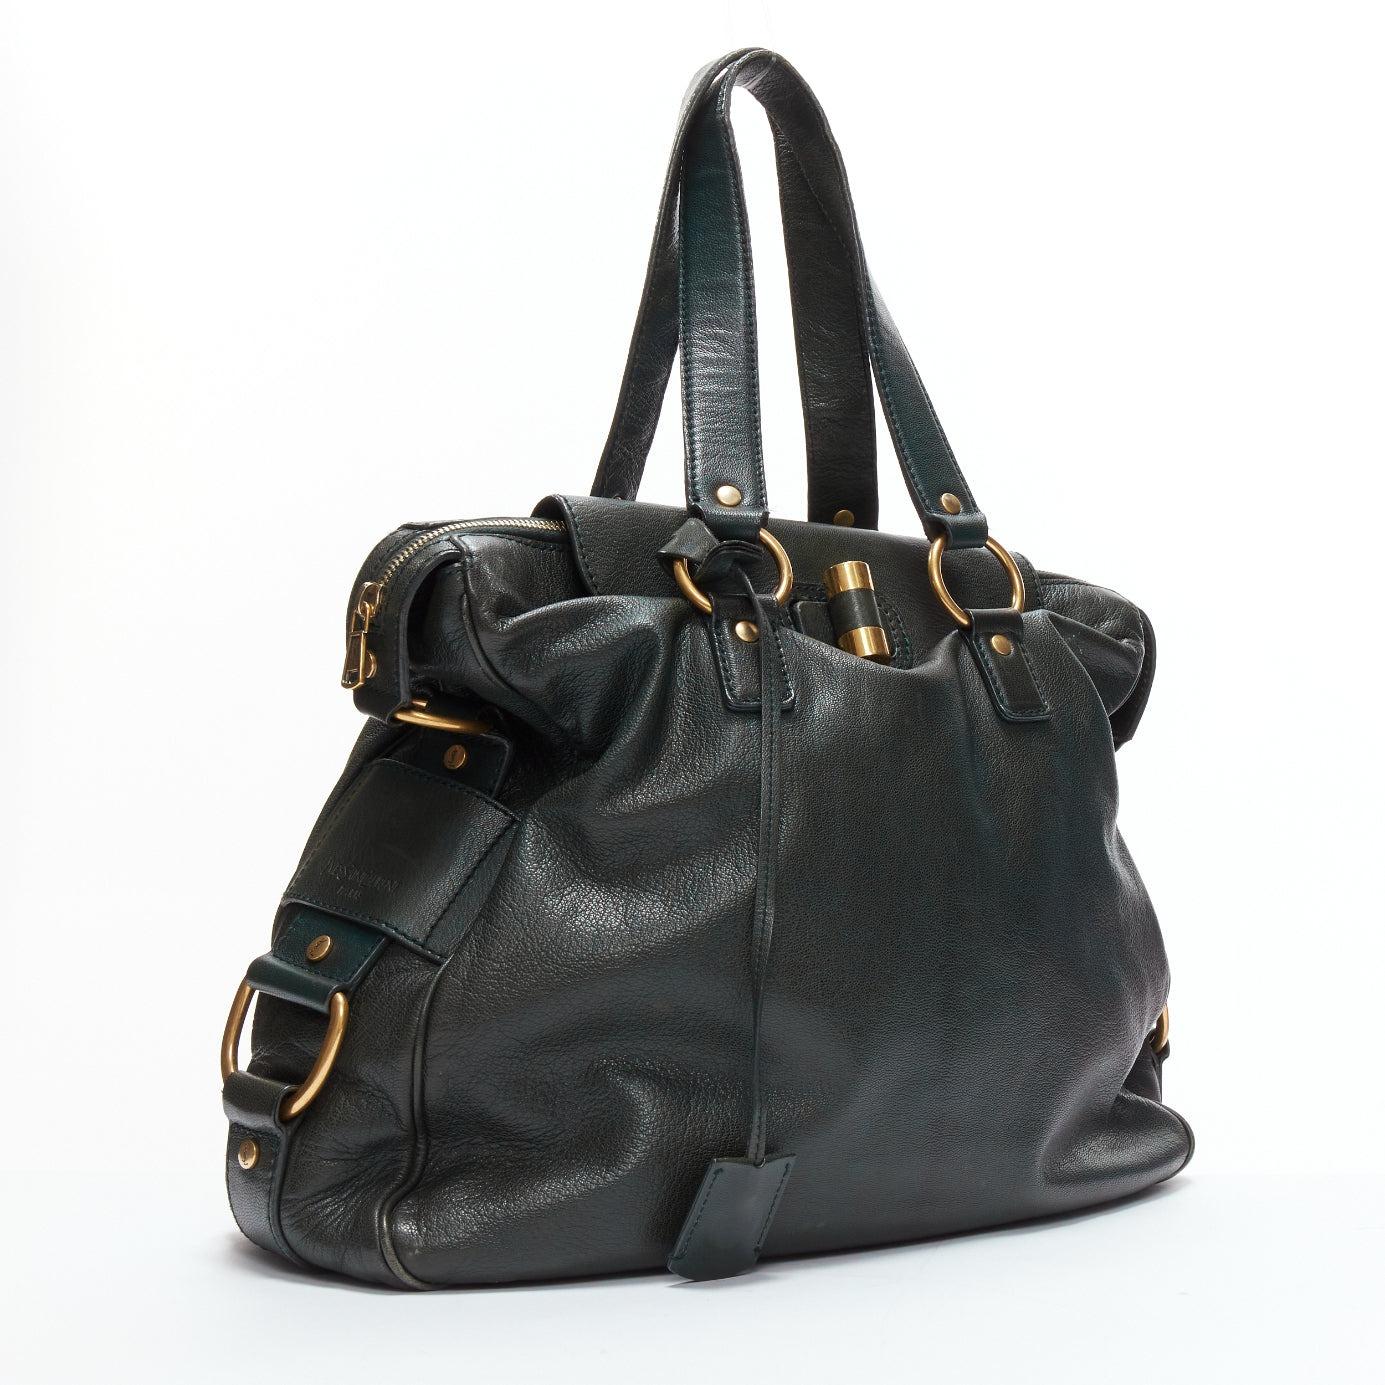 Women's YVES SAINT LAURENT Rive Gauche Muse dark green leather GHW satchel bag